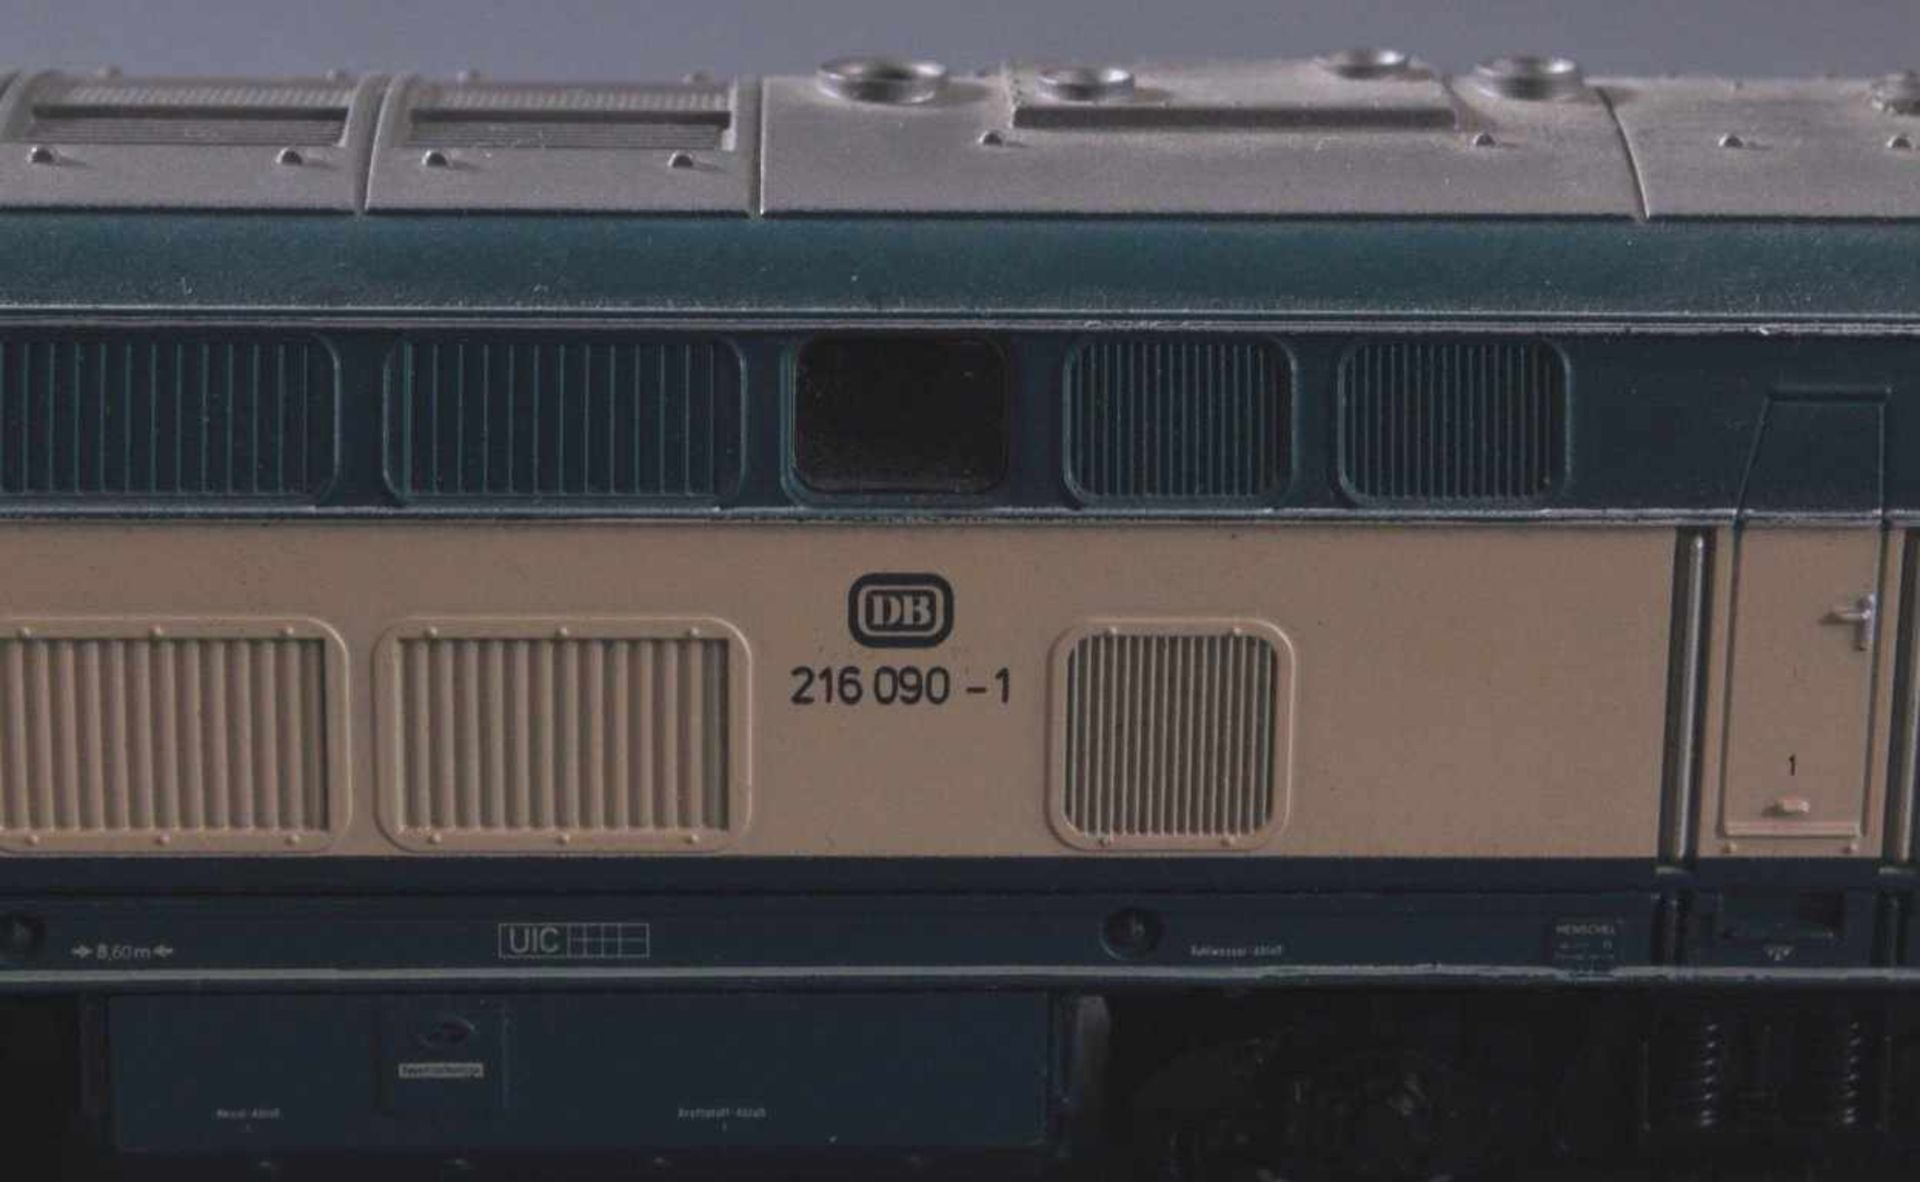 Märklin H0 3071 E-Lok BR 216 090-1 DB in beige/grün mit4 Güterwaggons - Bild 3 aus 3